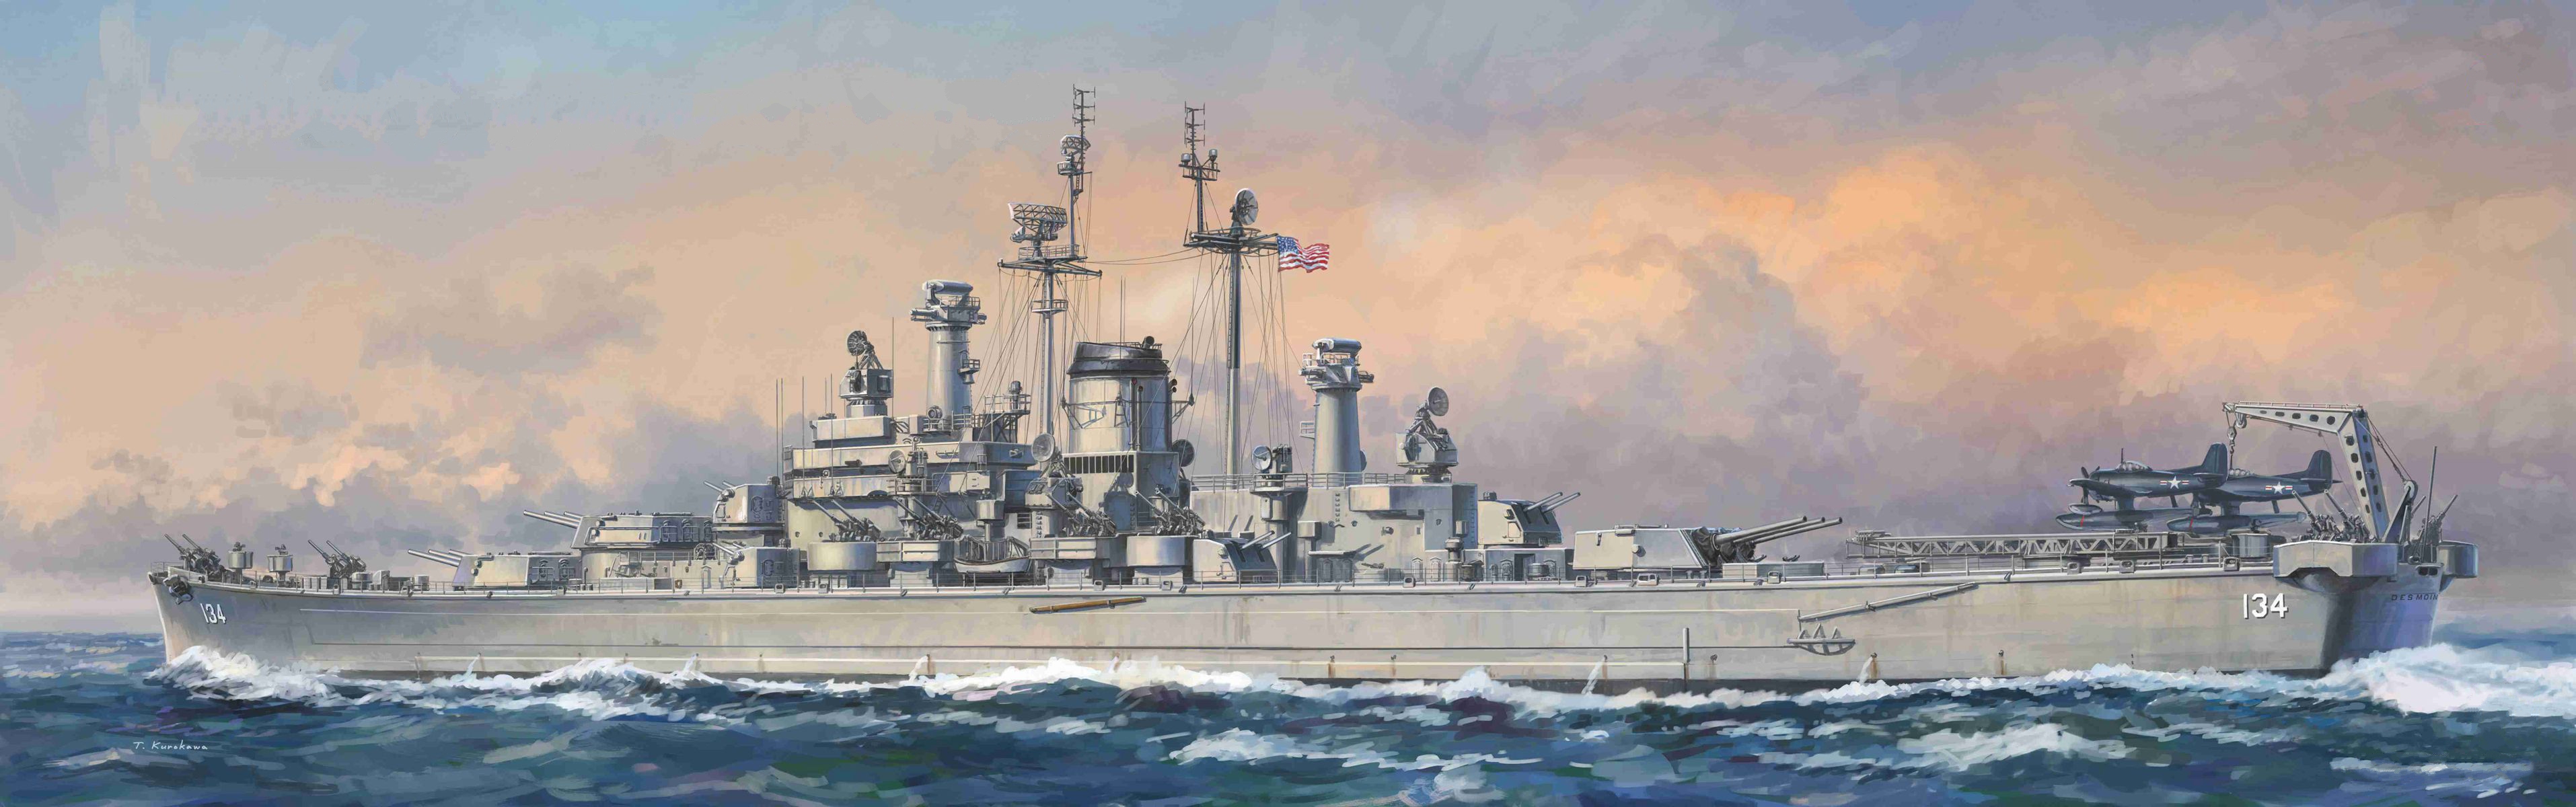 рисунок USS Des Moines CA-134